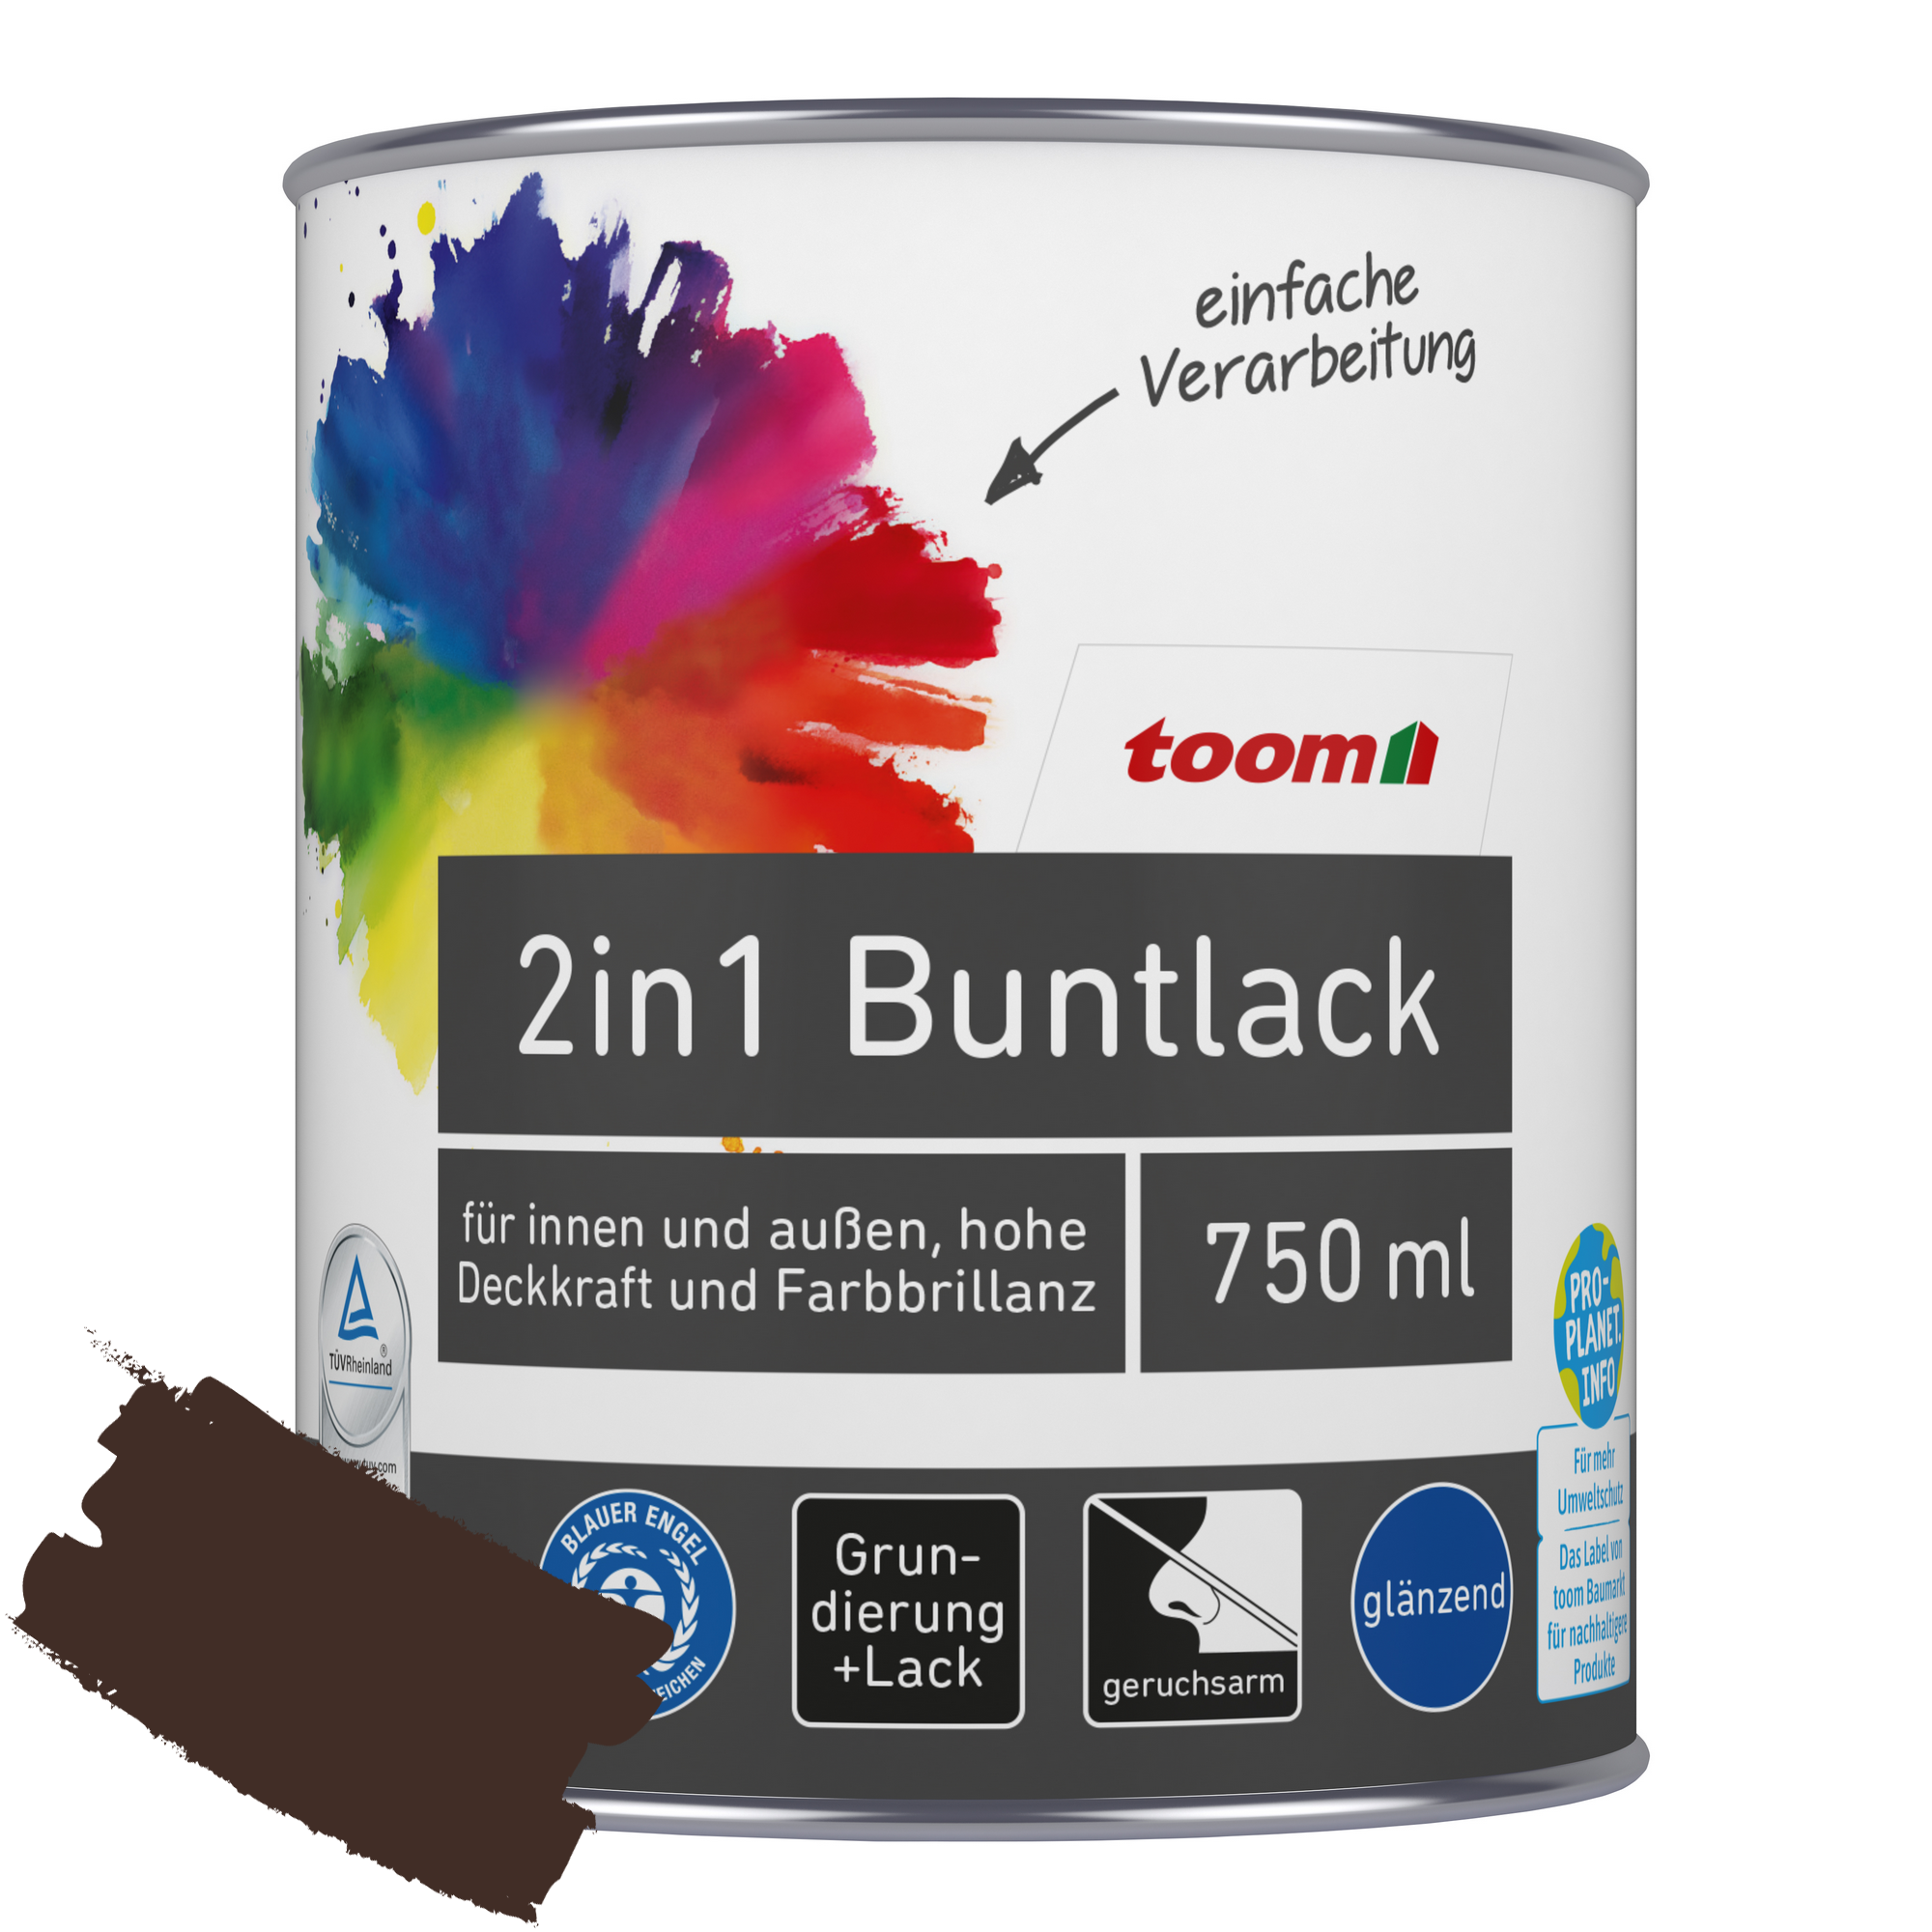 2in1 Buntlack 'Edelbraun' schokobraun glänzend 750 ml + product picture